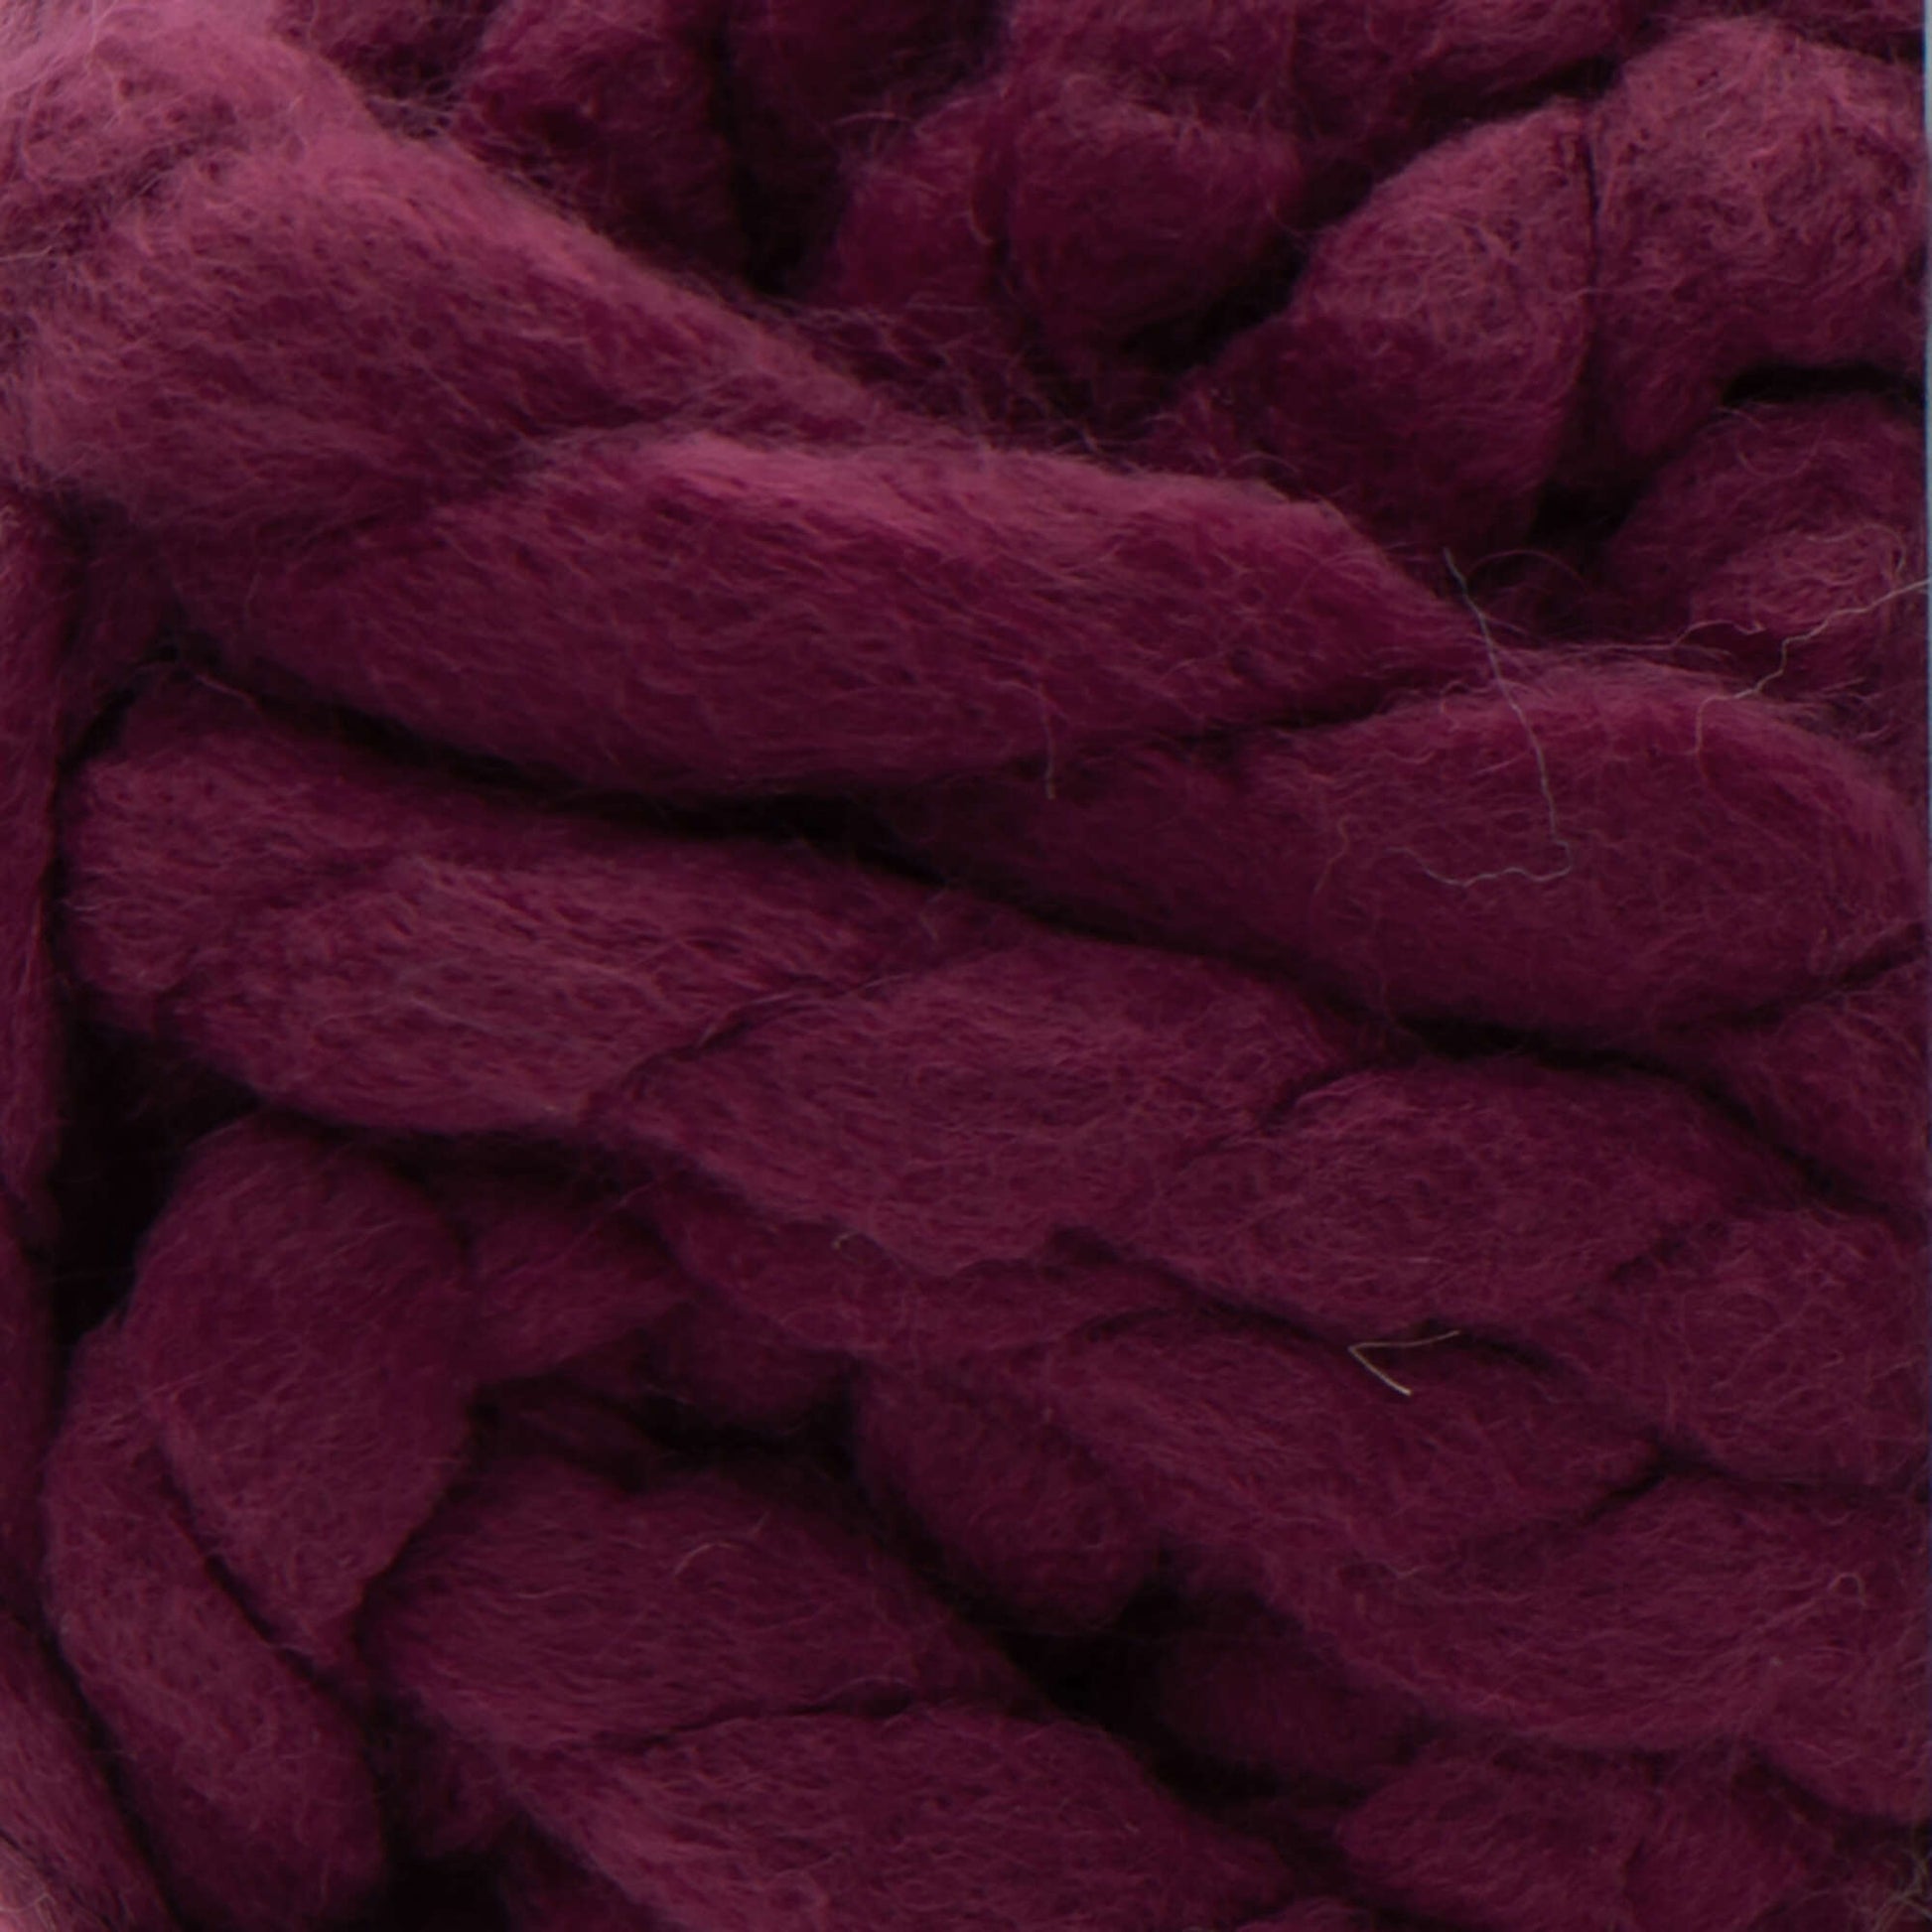 Red Heart Irresistible Yarn - Clearance shades Burgundy